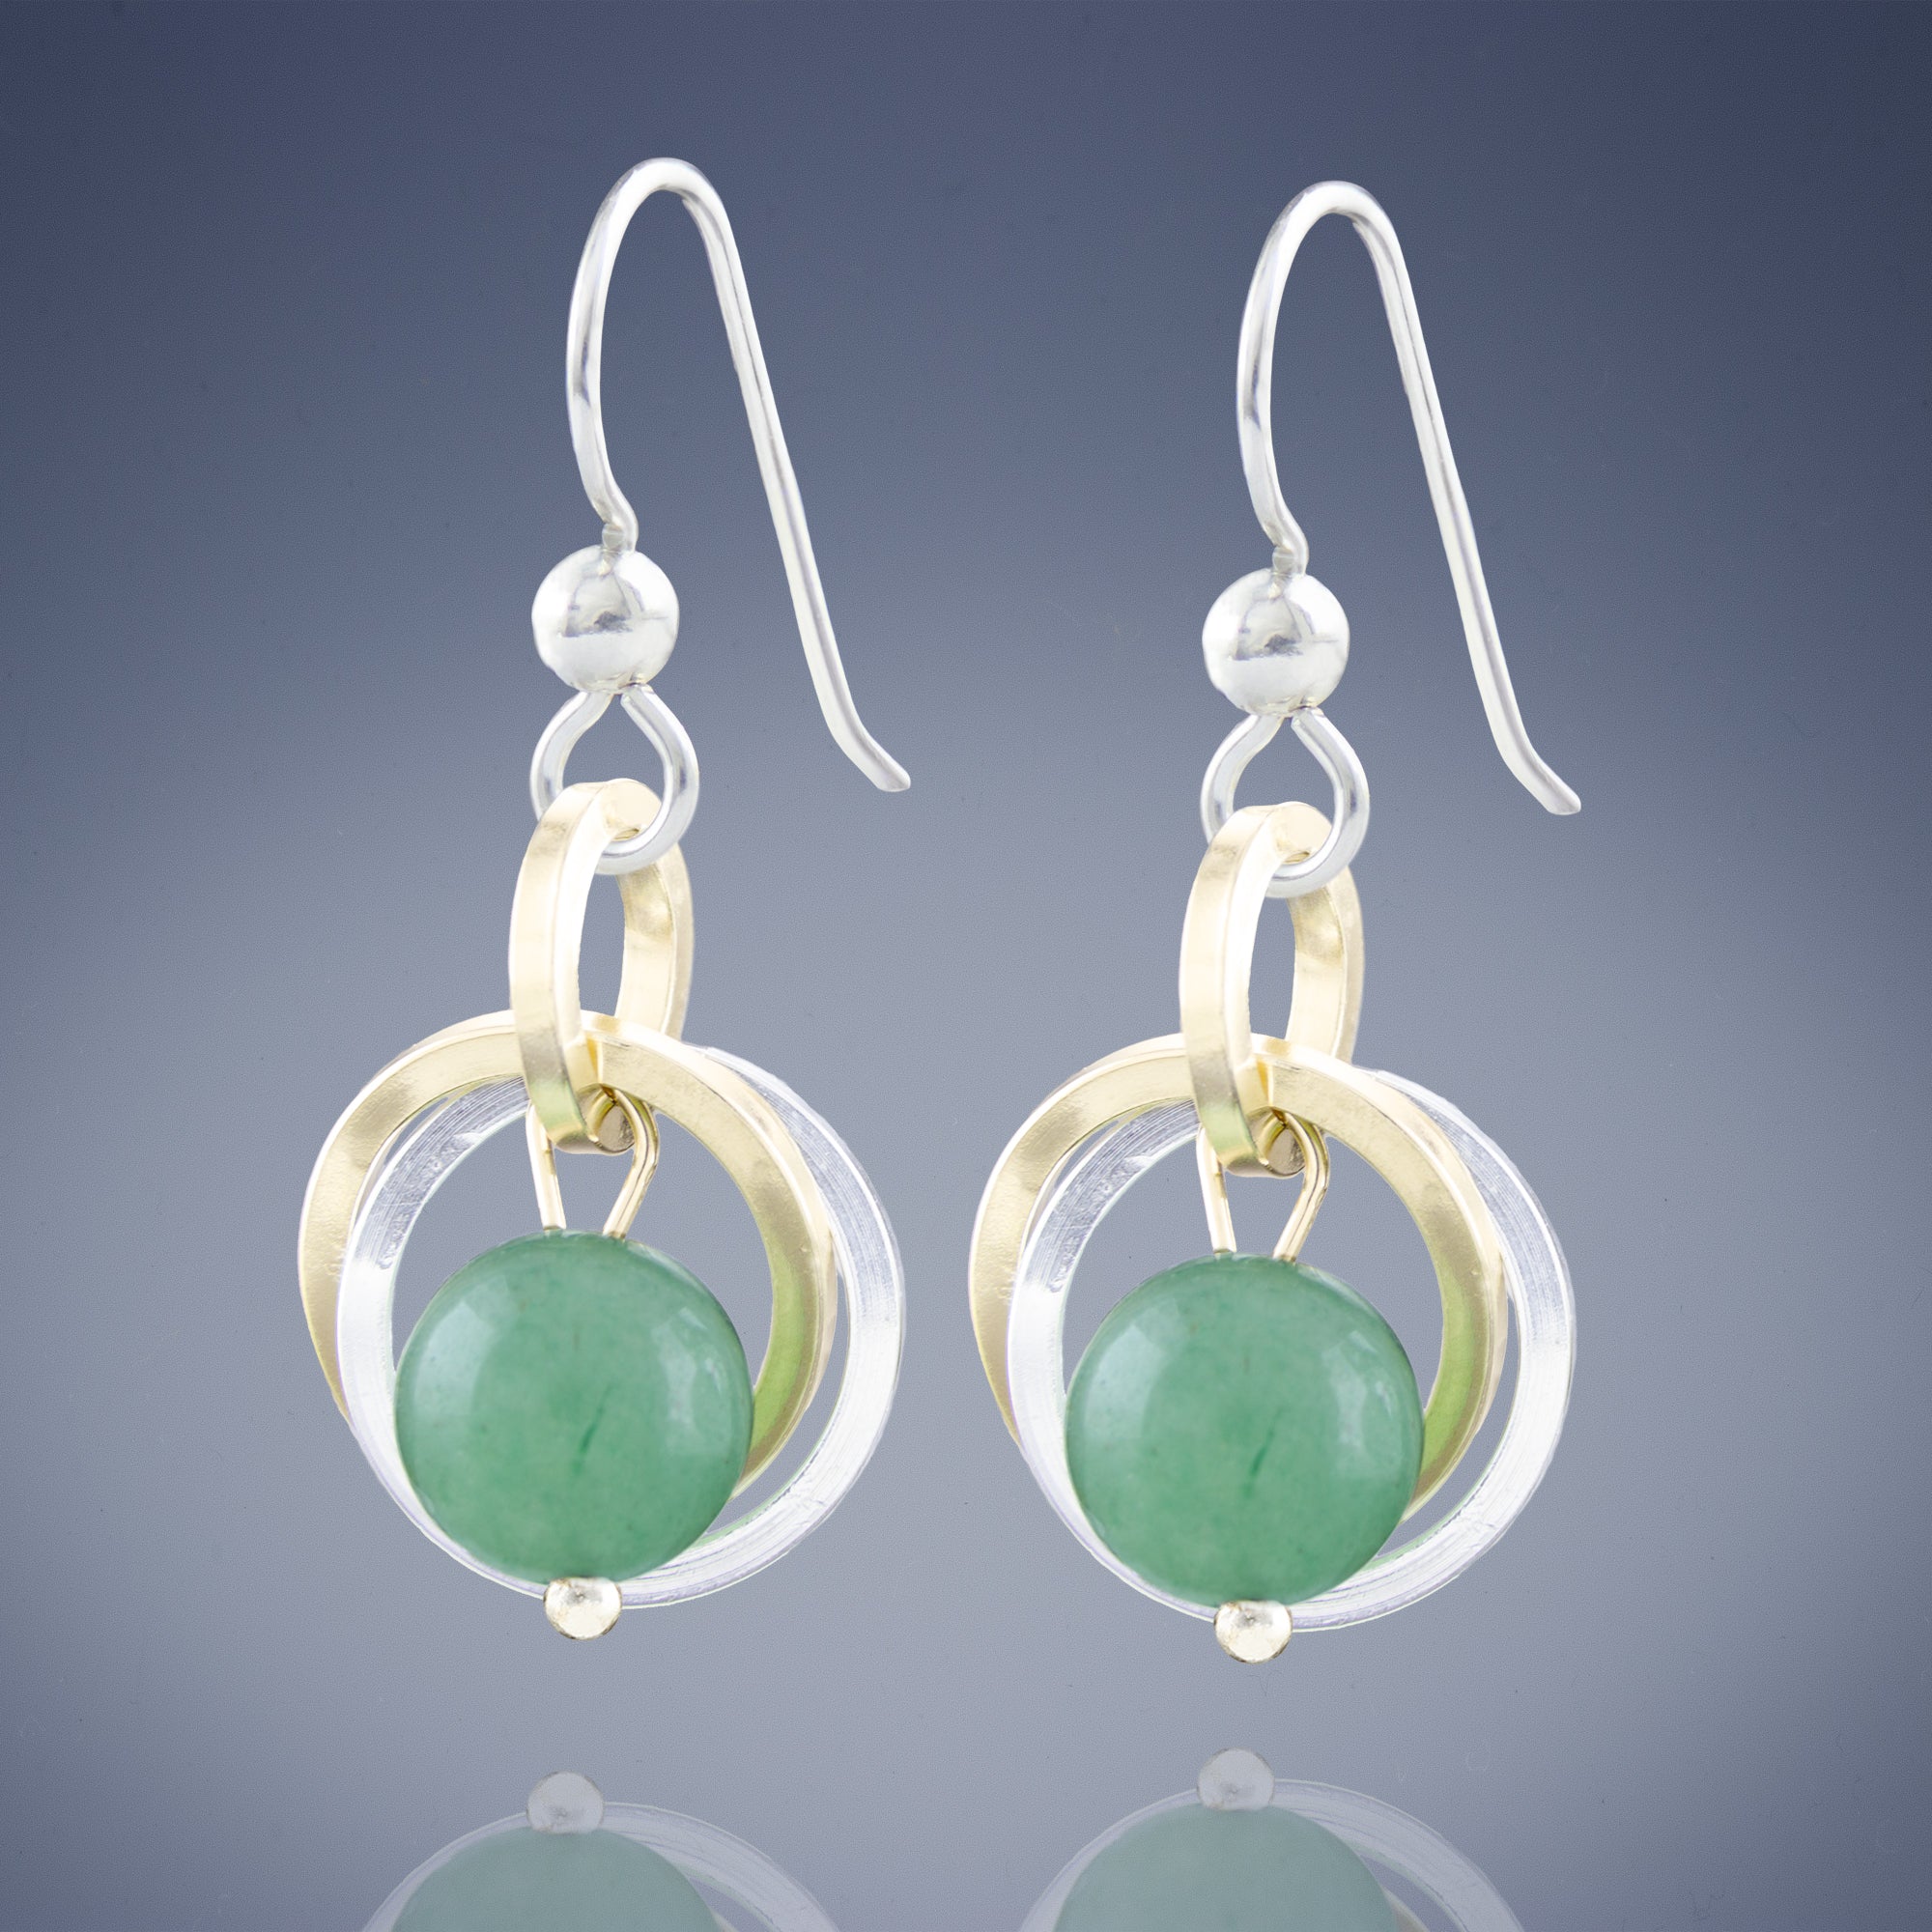 Light Green Aventurine Genuine Gemstone Two Tone Dangle Earrings in Sterling Silver and 14K Gold Fill